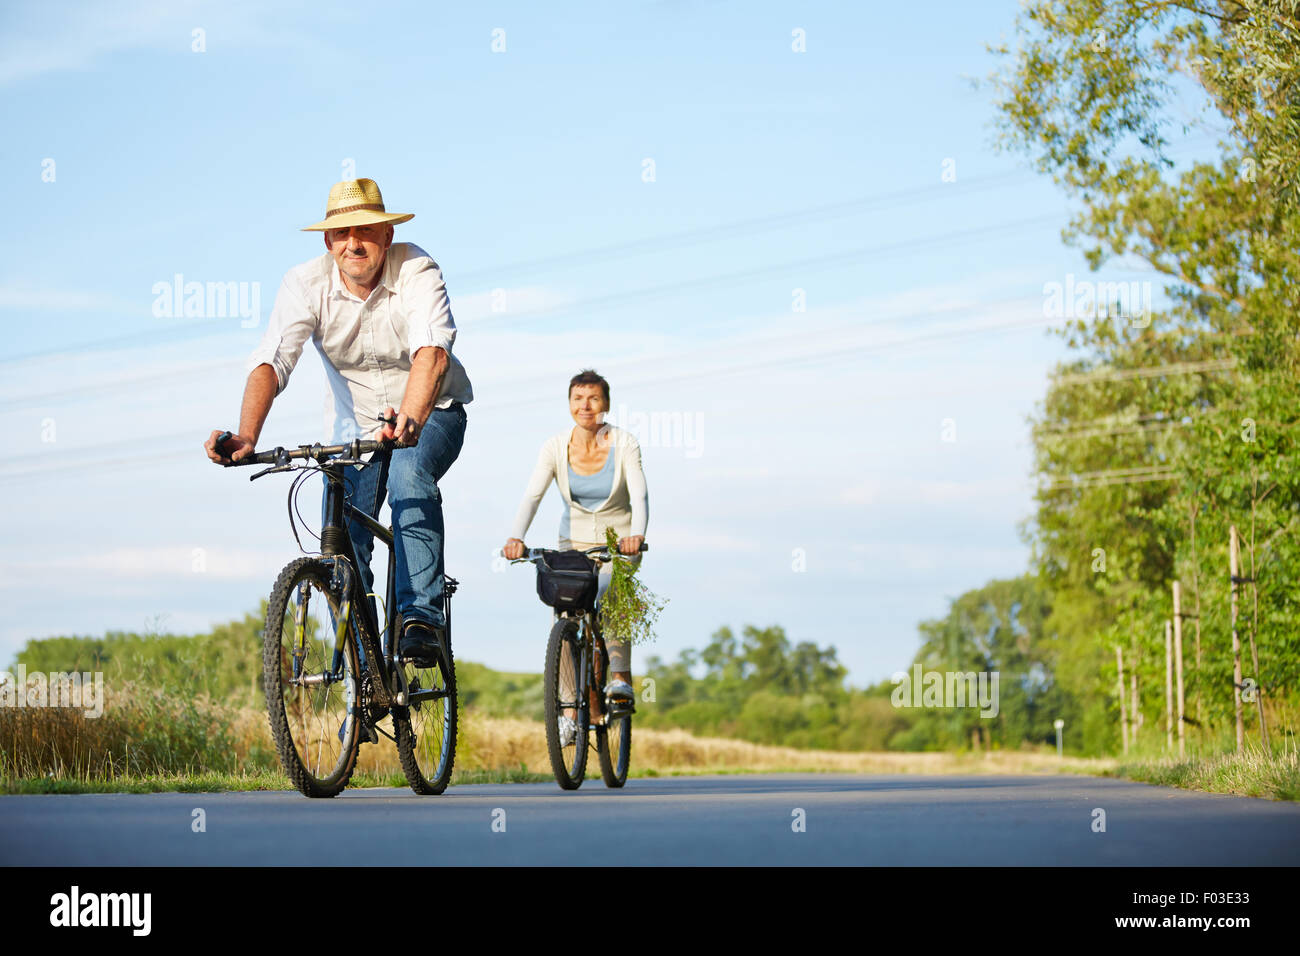 Senior couple riding bikes through summer landscape on a road Stock Photo